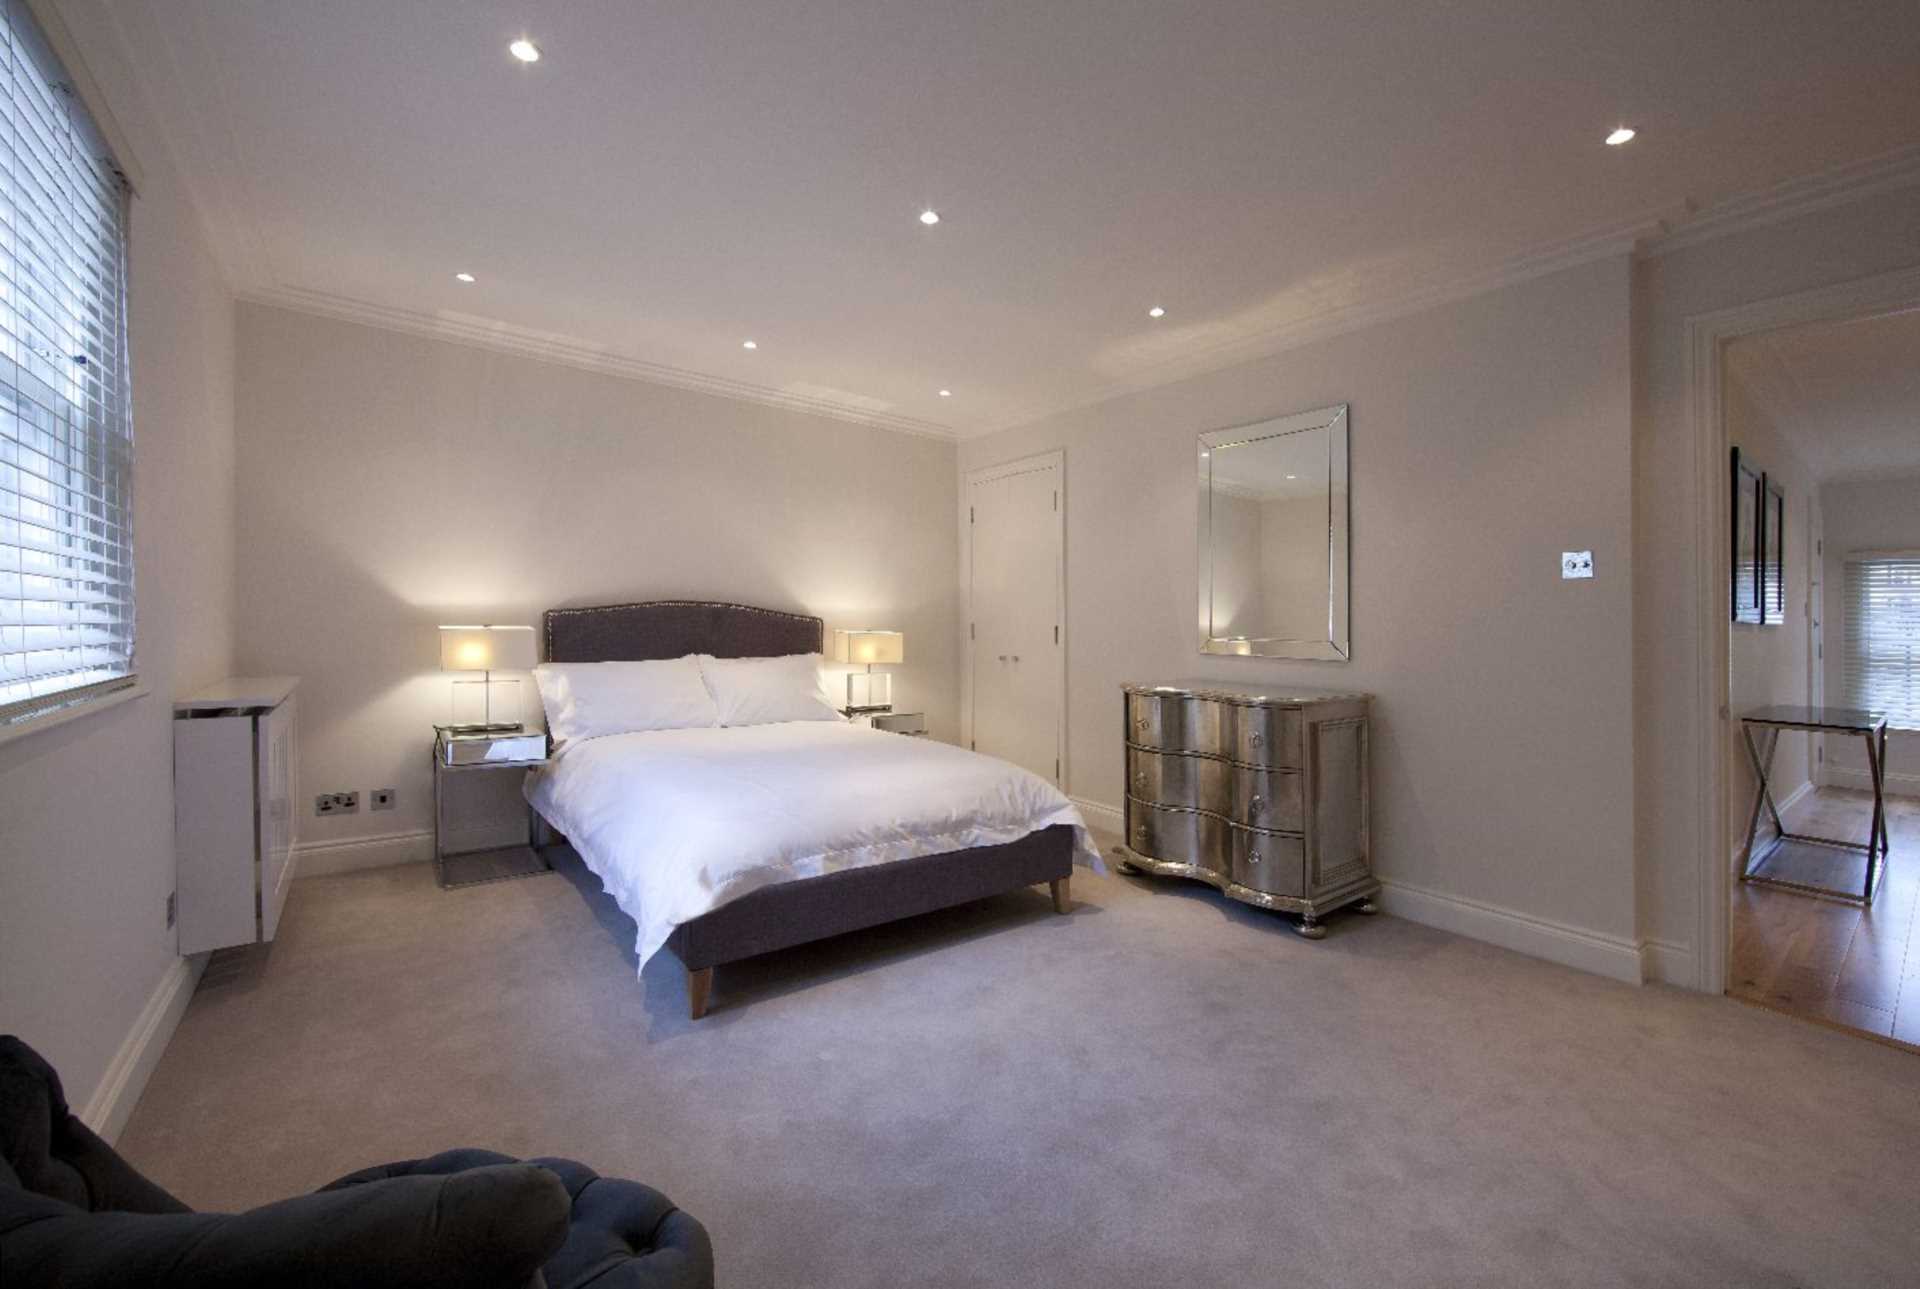 London W1K 3QA 1 bed flat rental property internal/external image-2